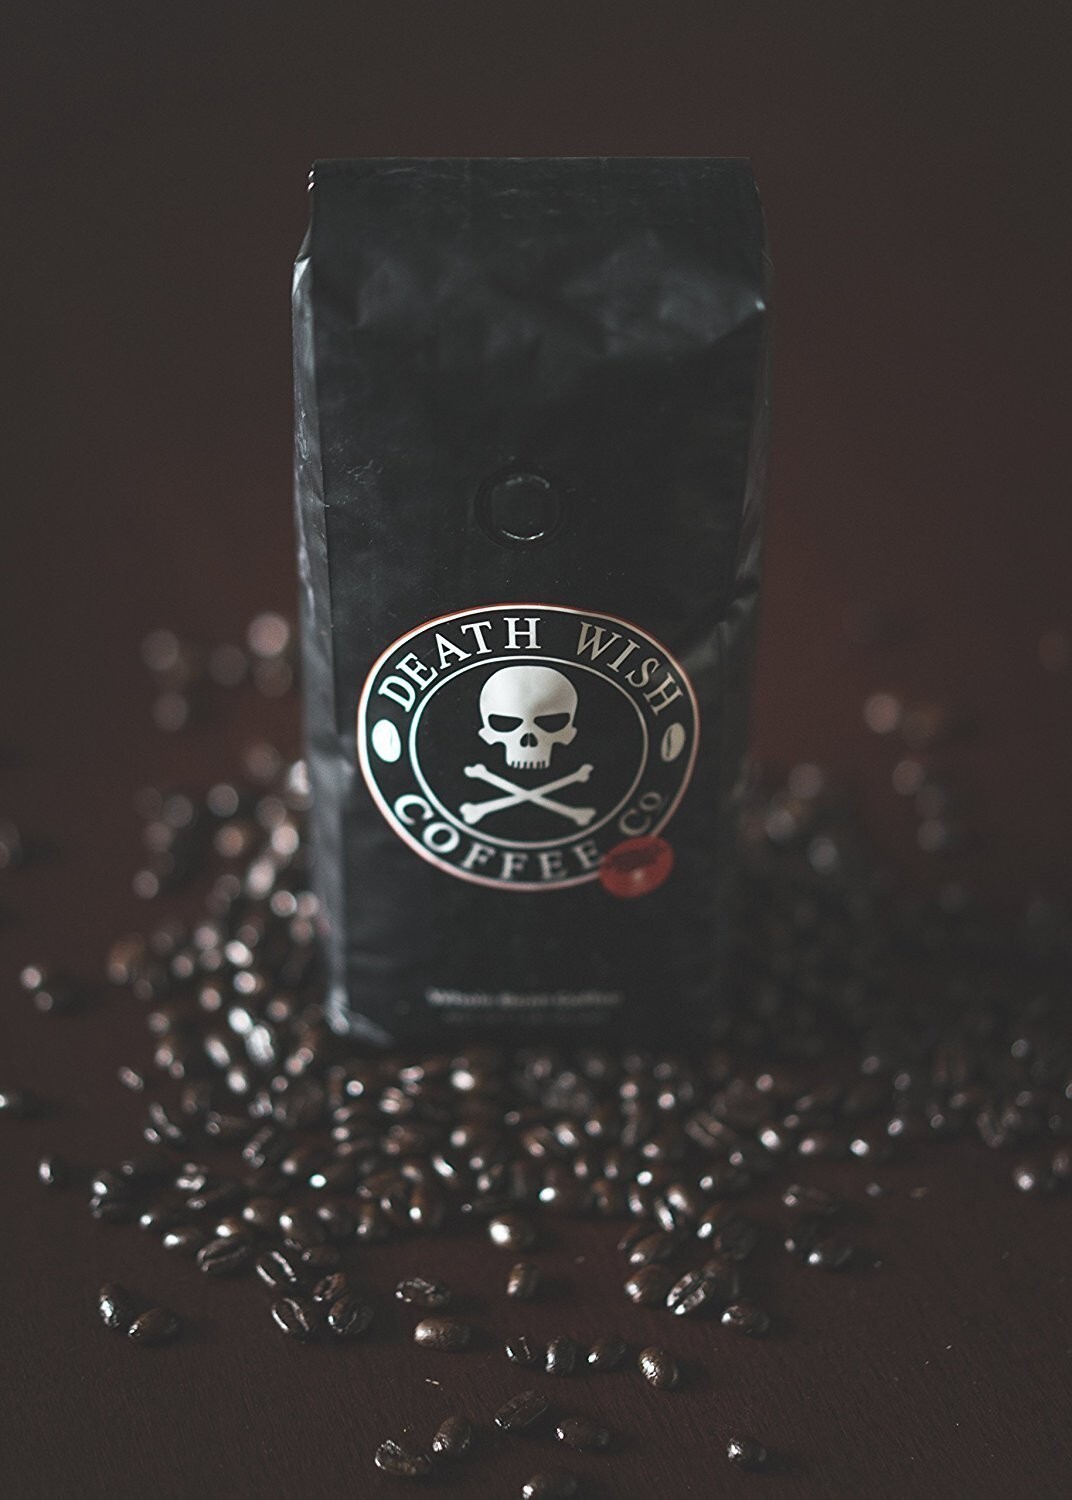 7. Death Wish Coffee, The World's Strongest Coffee